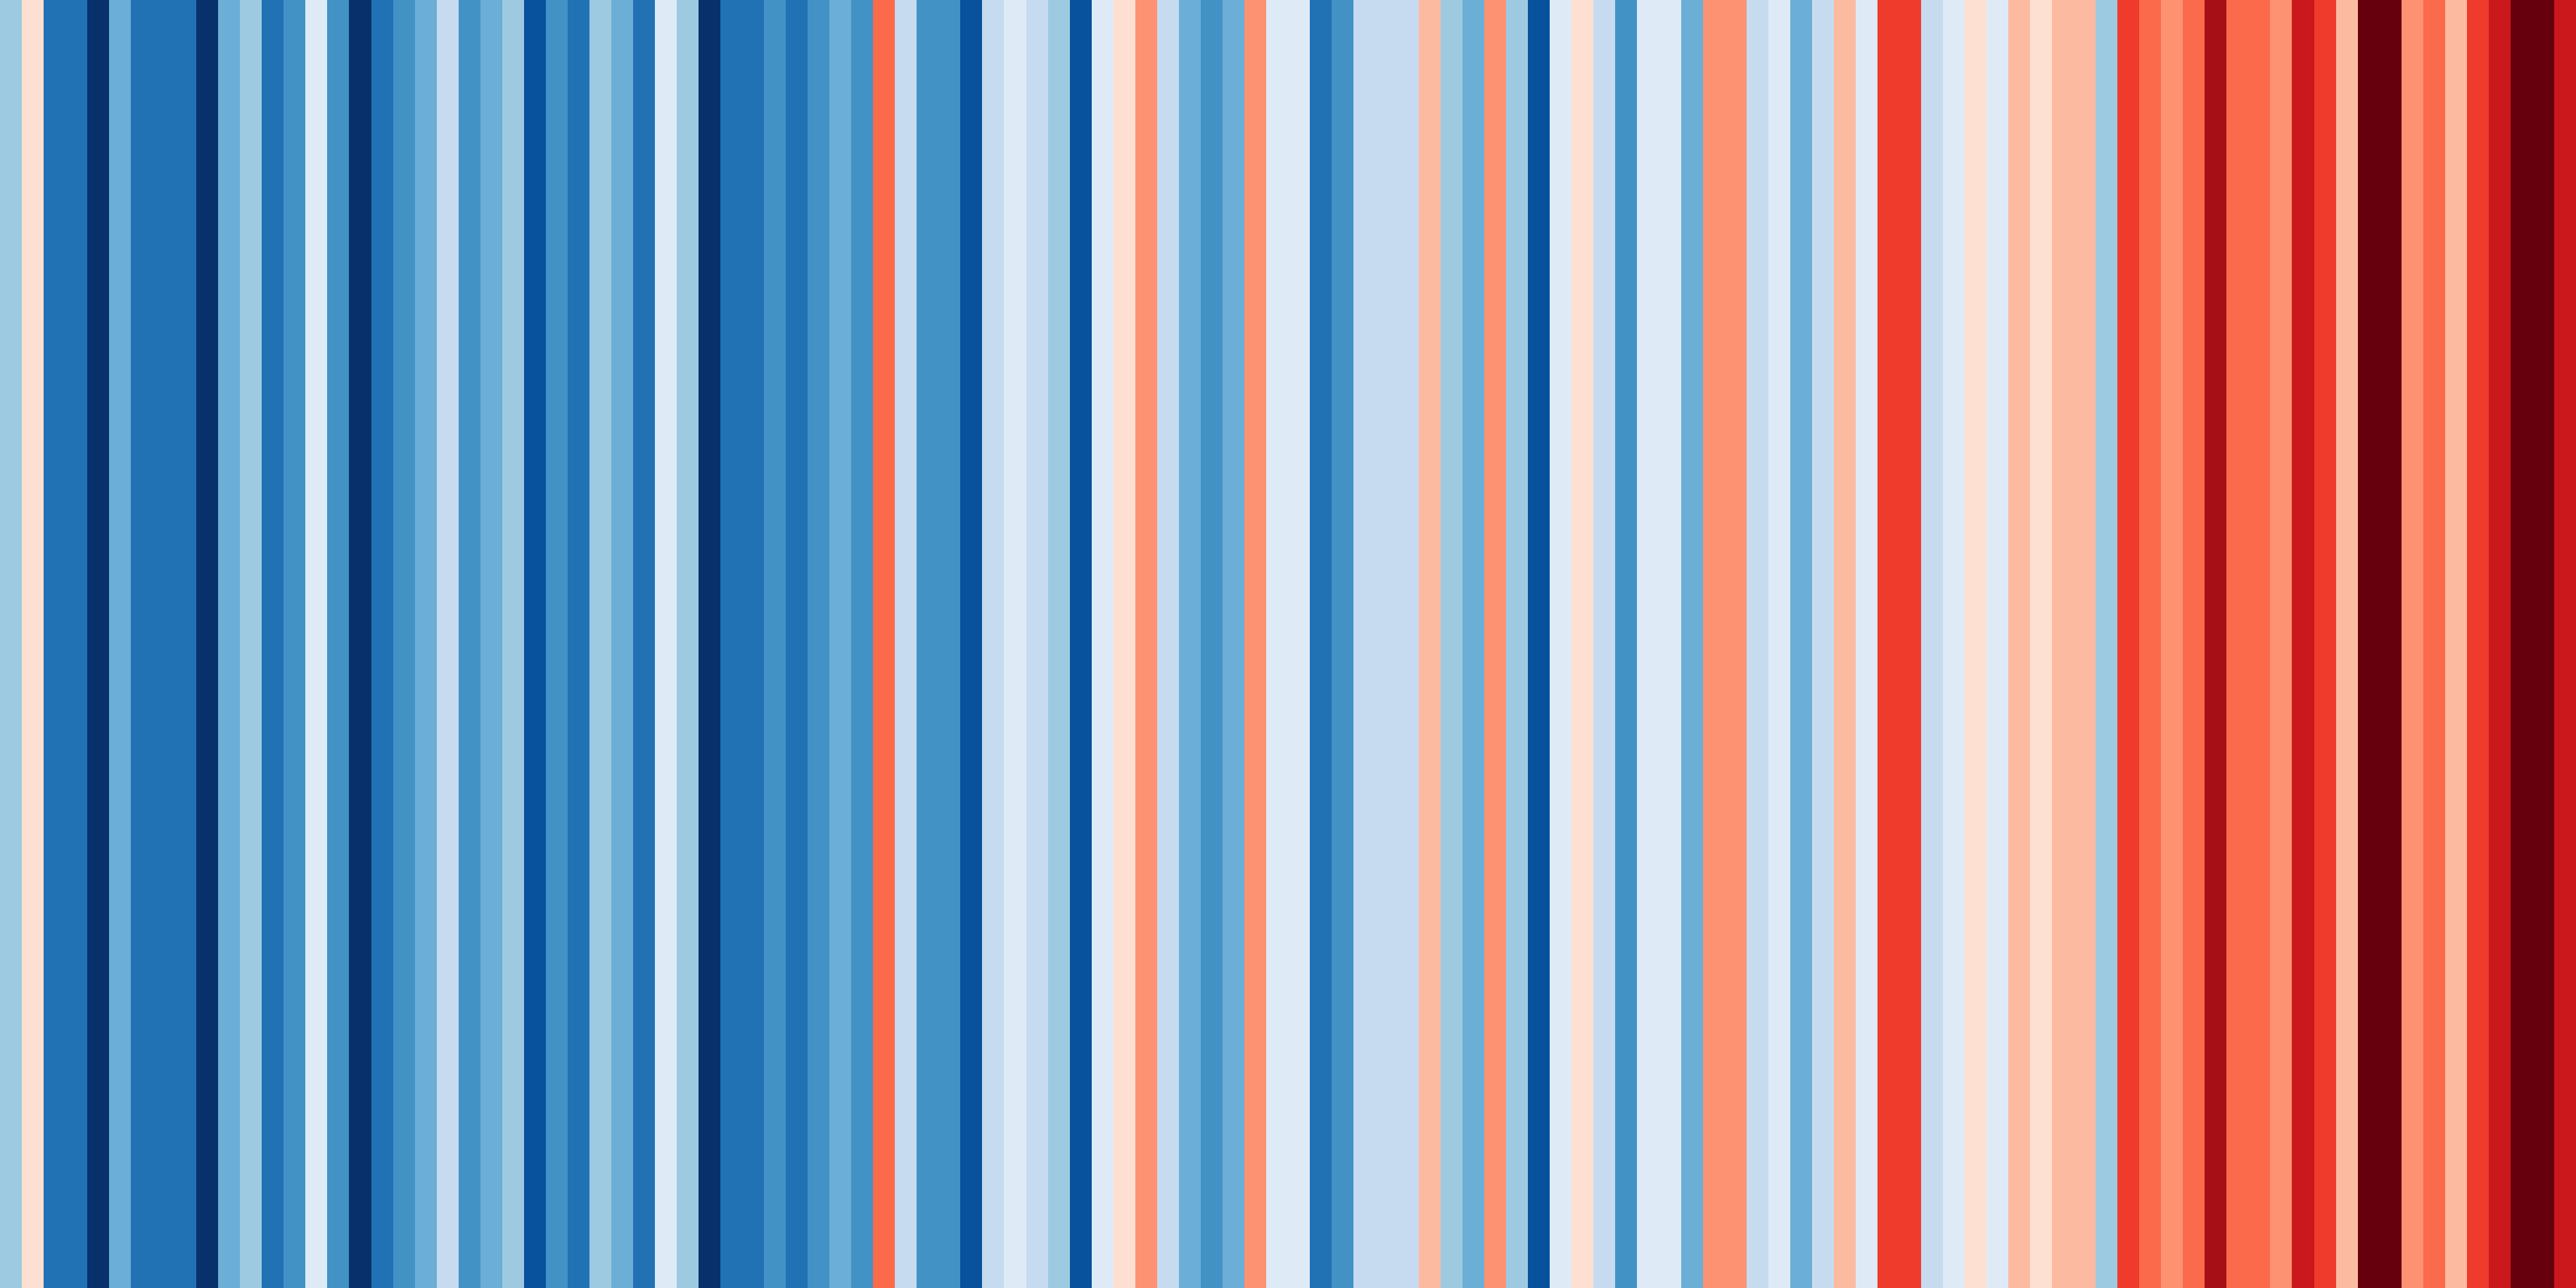 India average temperature the past 100 years